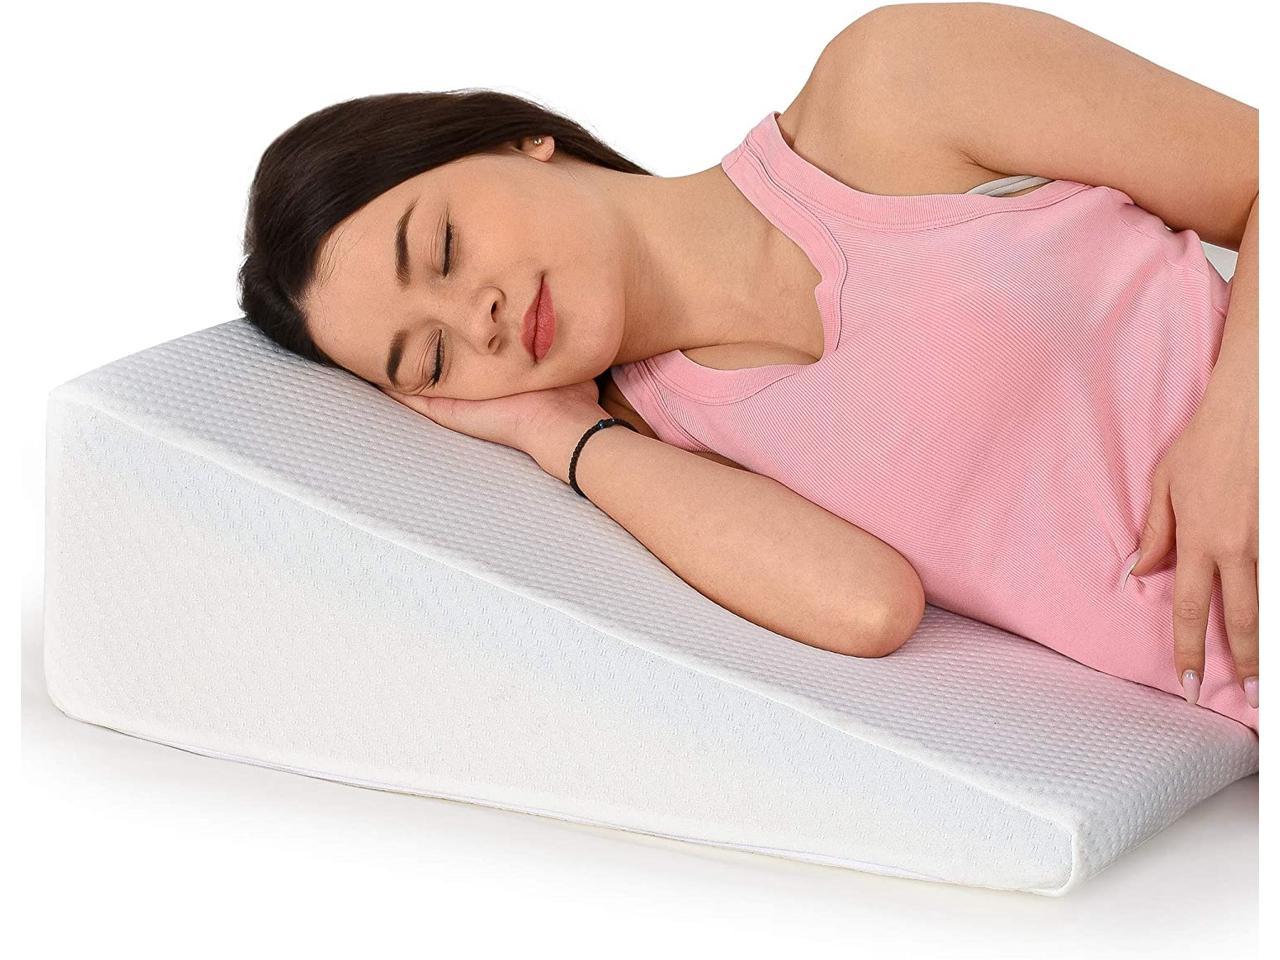 Bed Wedge Pillow Cooling Gel Memory Foam Top Acid Reflux Heartburn